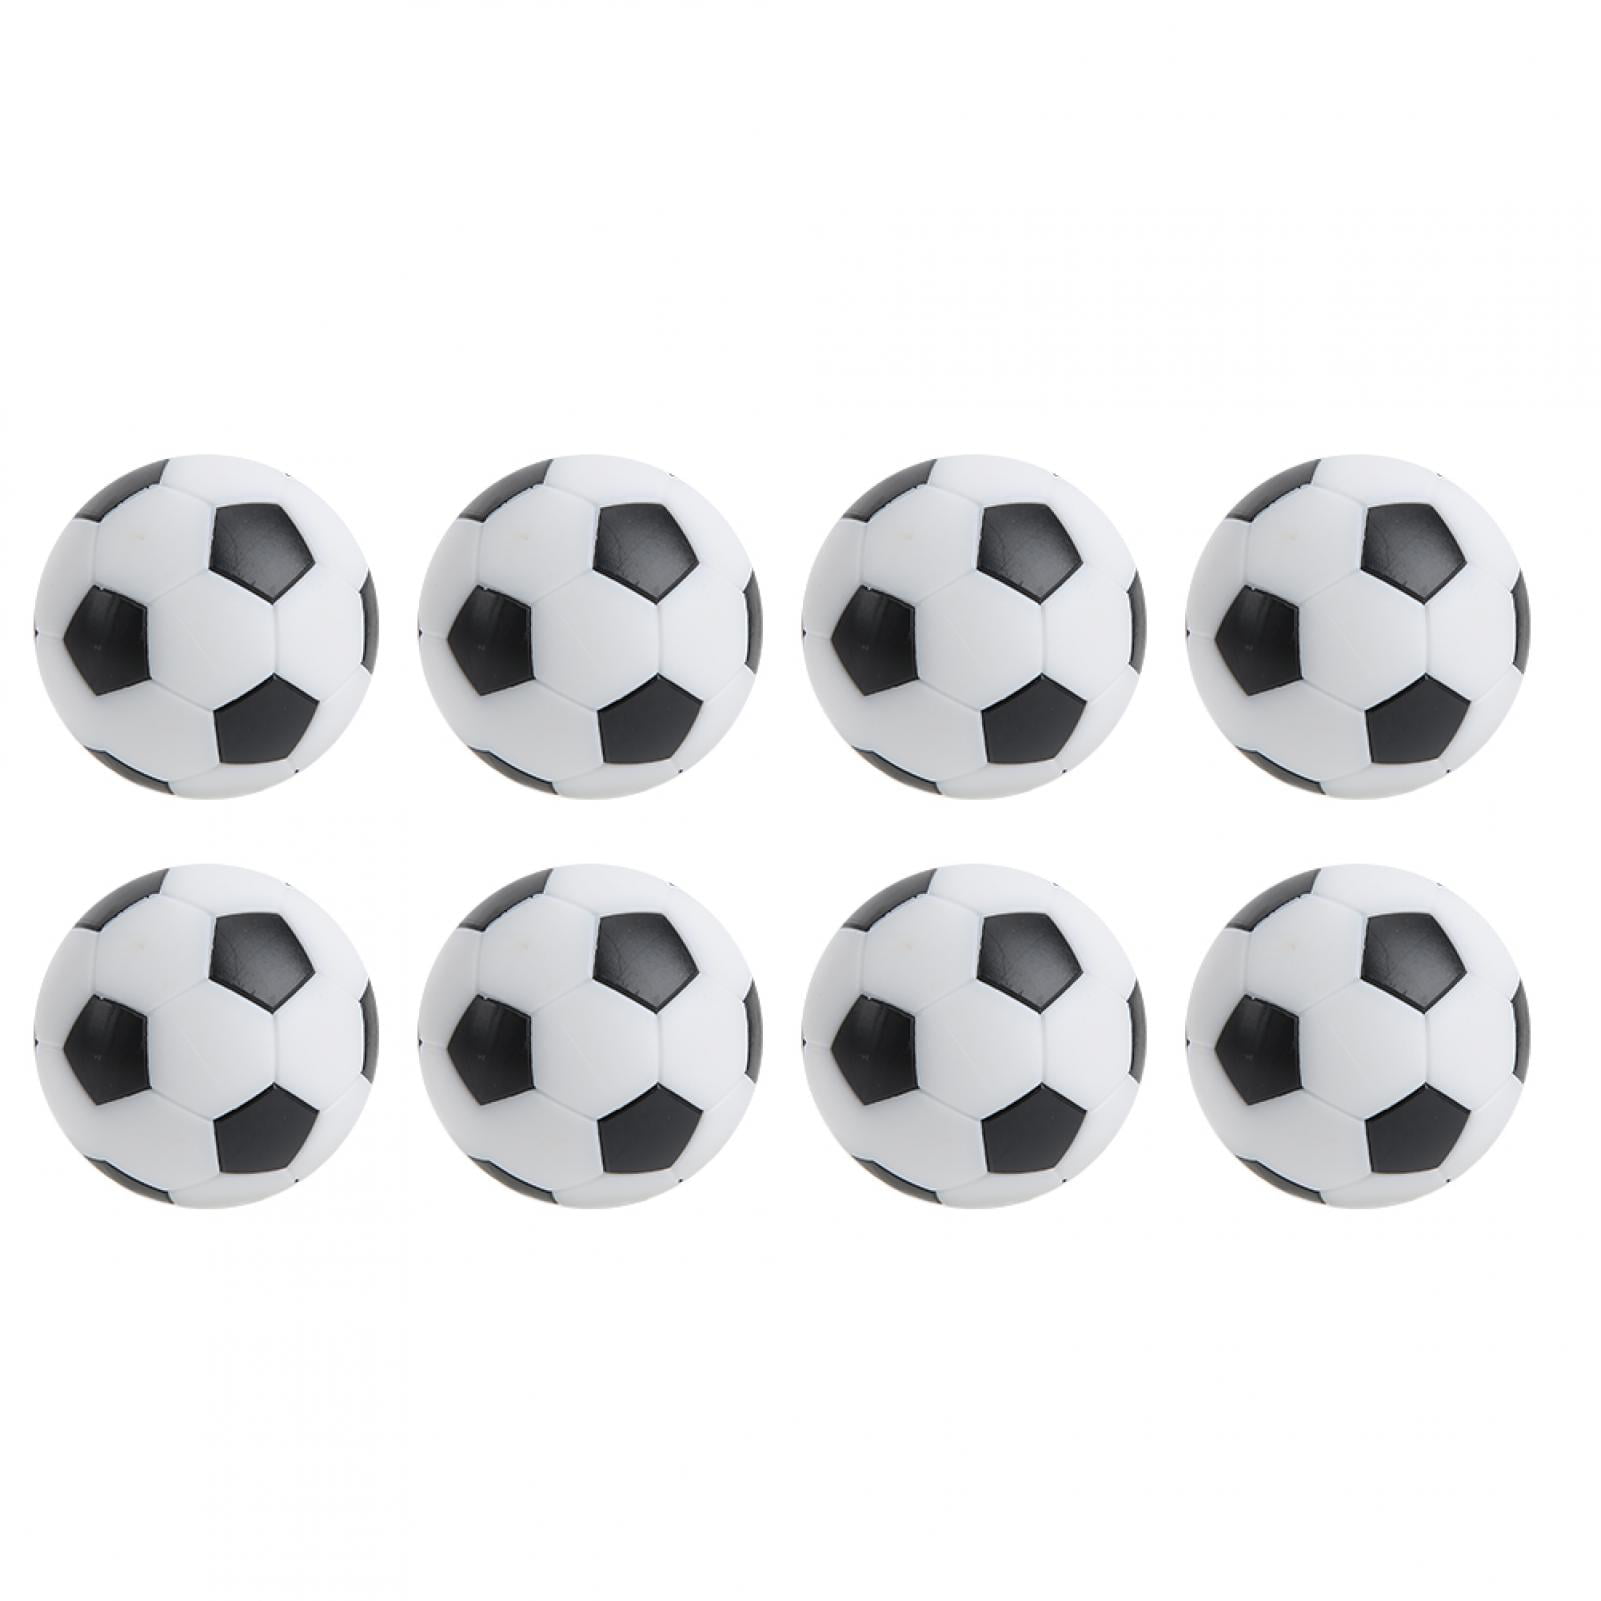 32mm Mini Soccer Table Foosball Ball Football Indoor Game XTS Entertainment R3Q9 